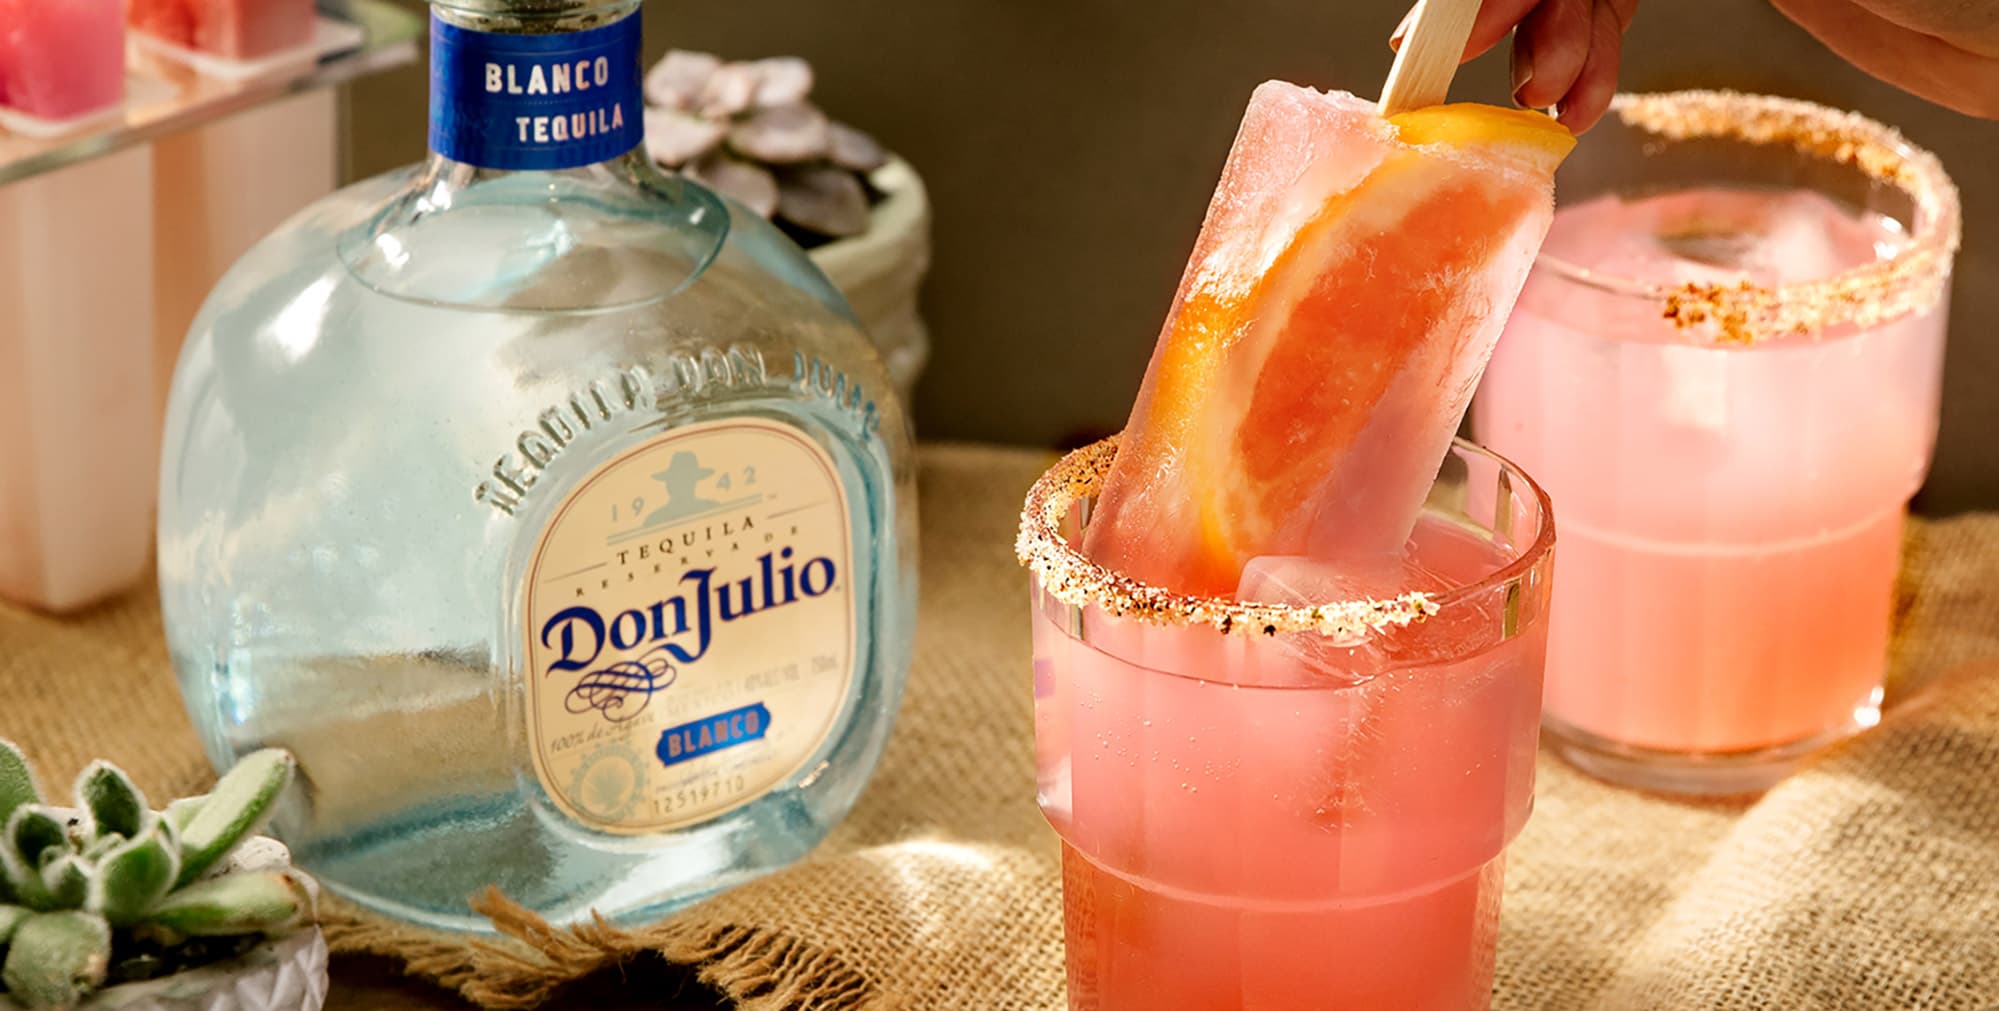 Paloma Paletas cocktail made with Don Julio Blanco Tequila